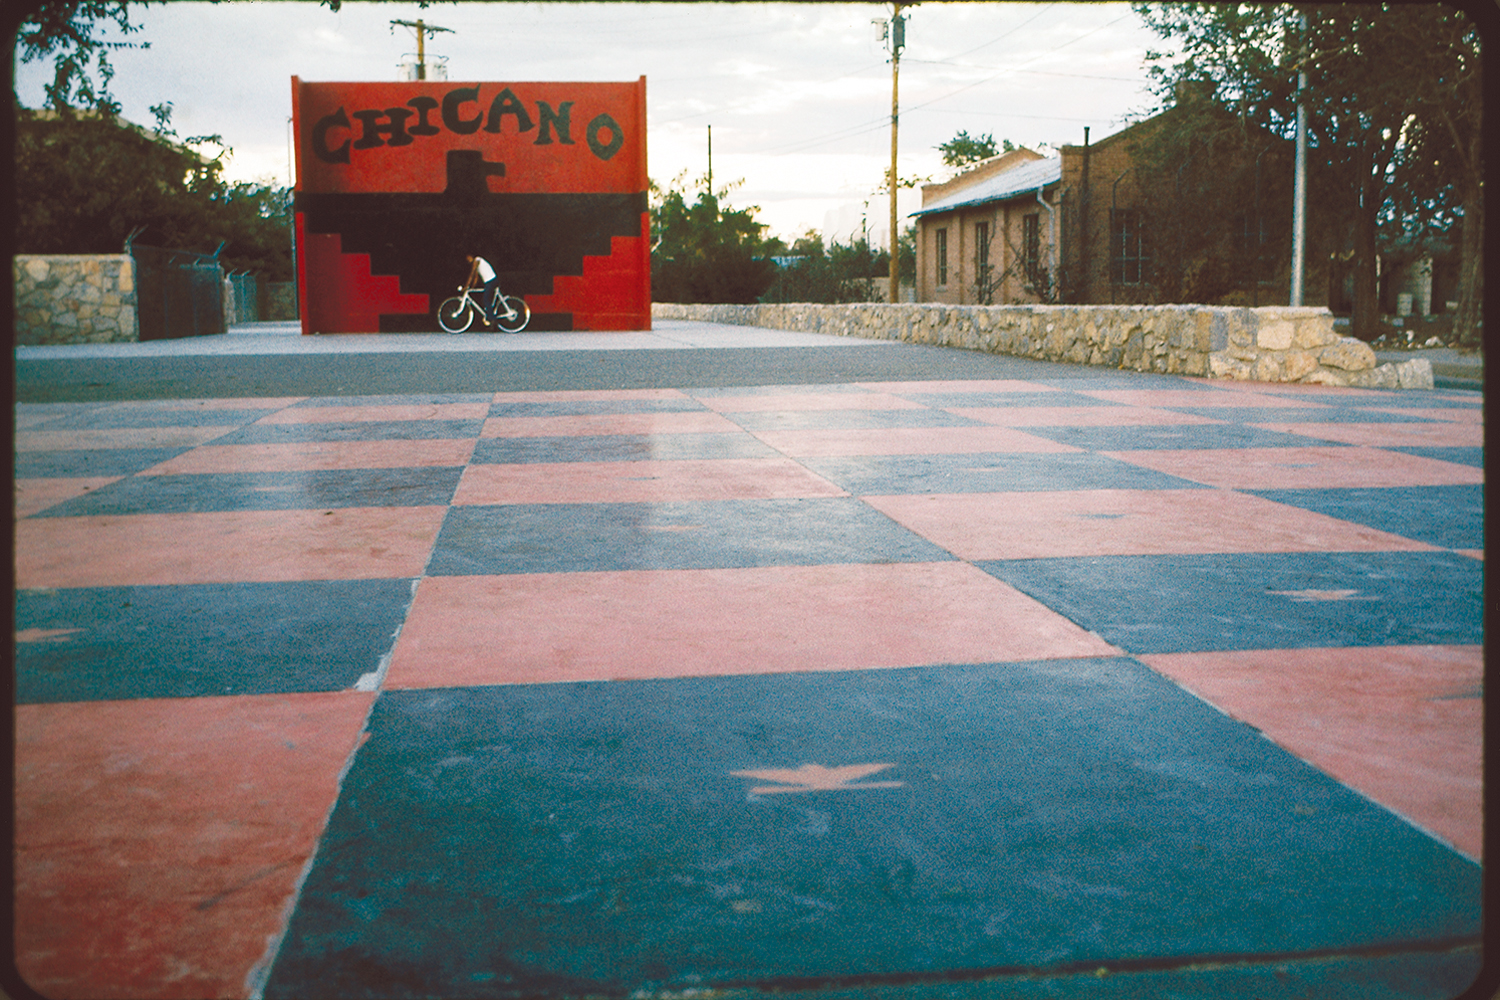 Thunderbird display in the Spanish speaking Second Ward. El Paso, Texas, 1972.